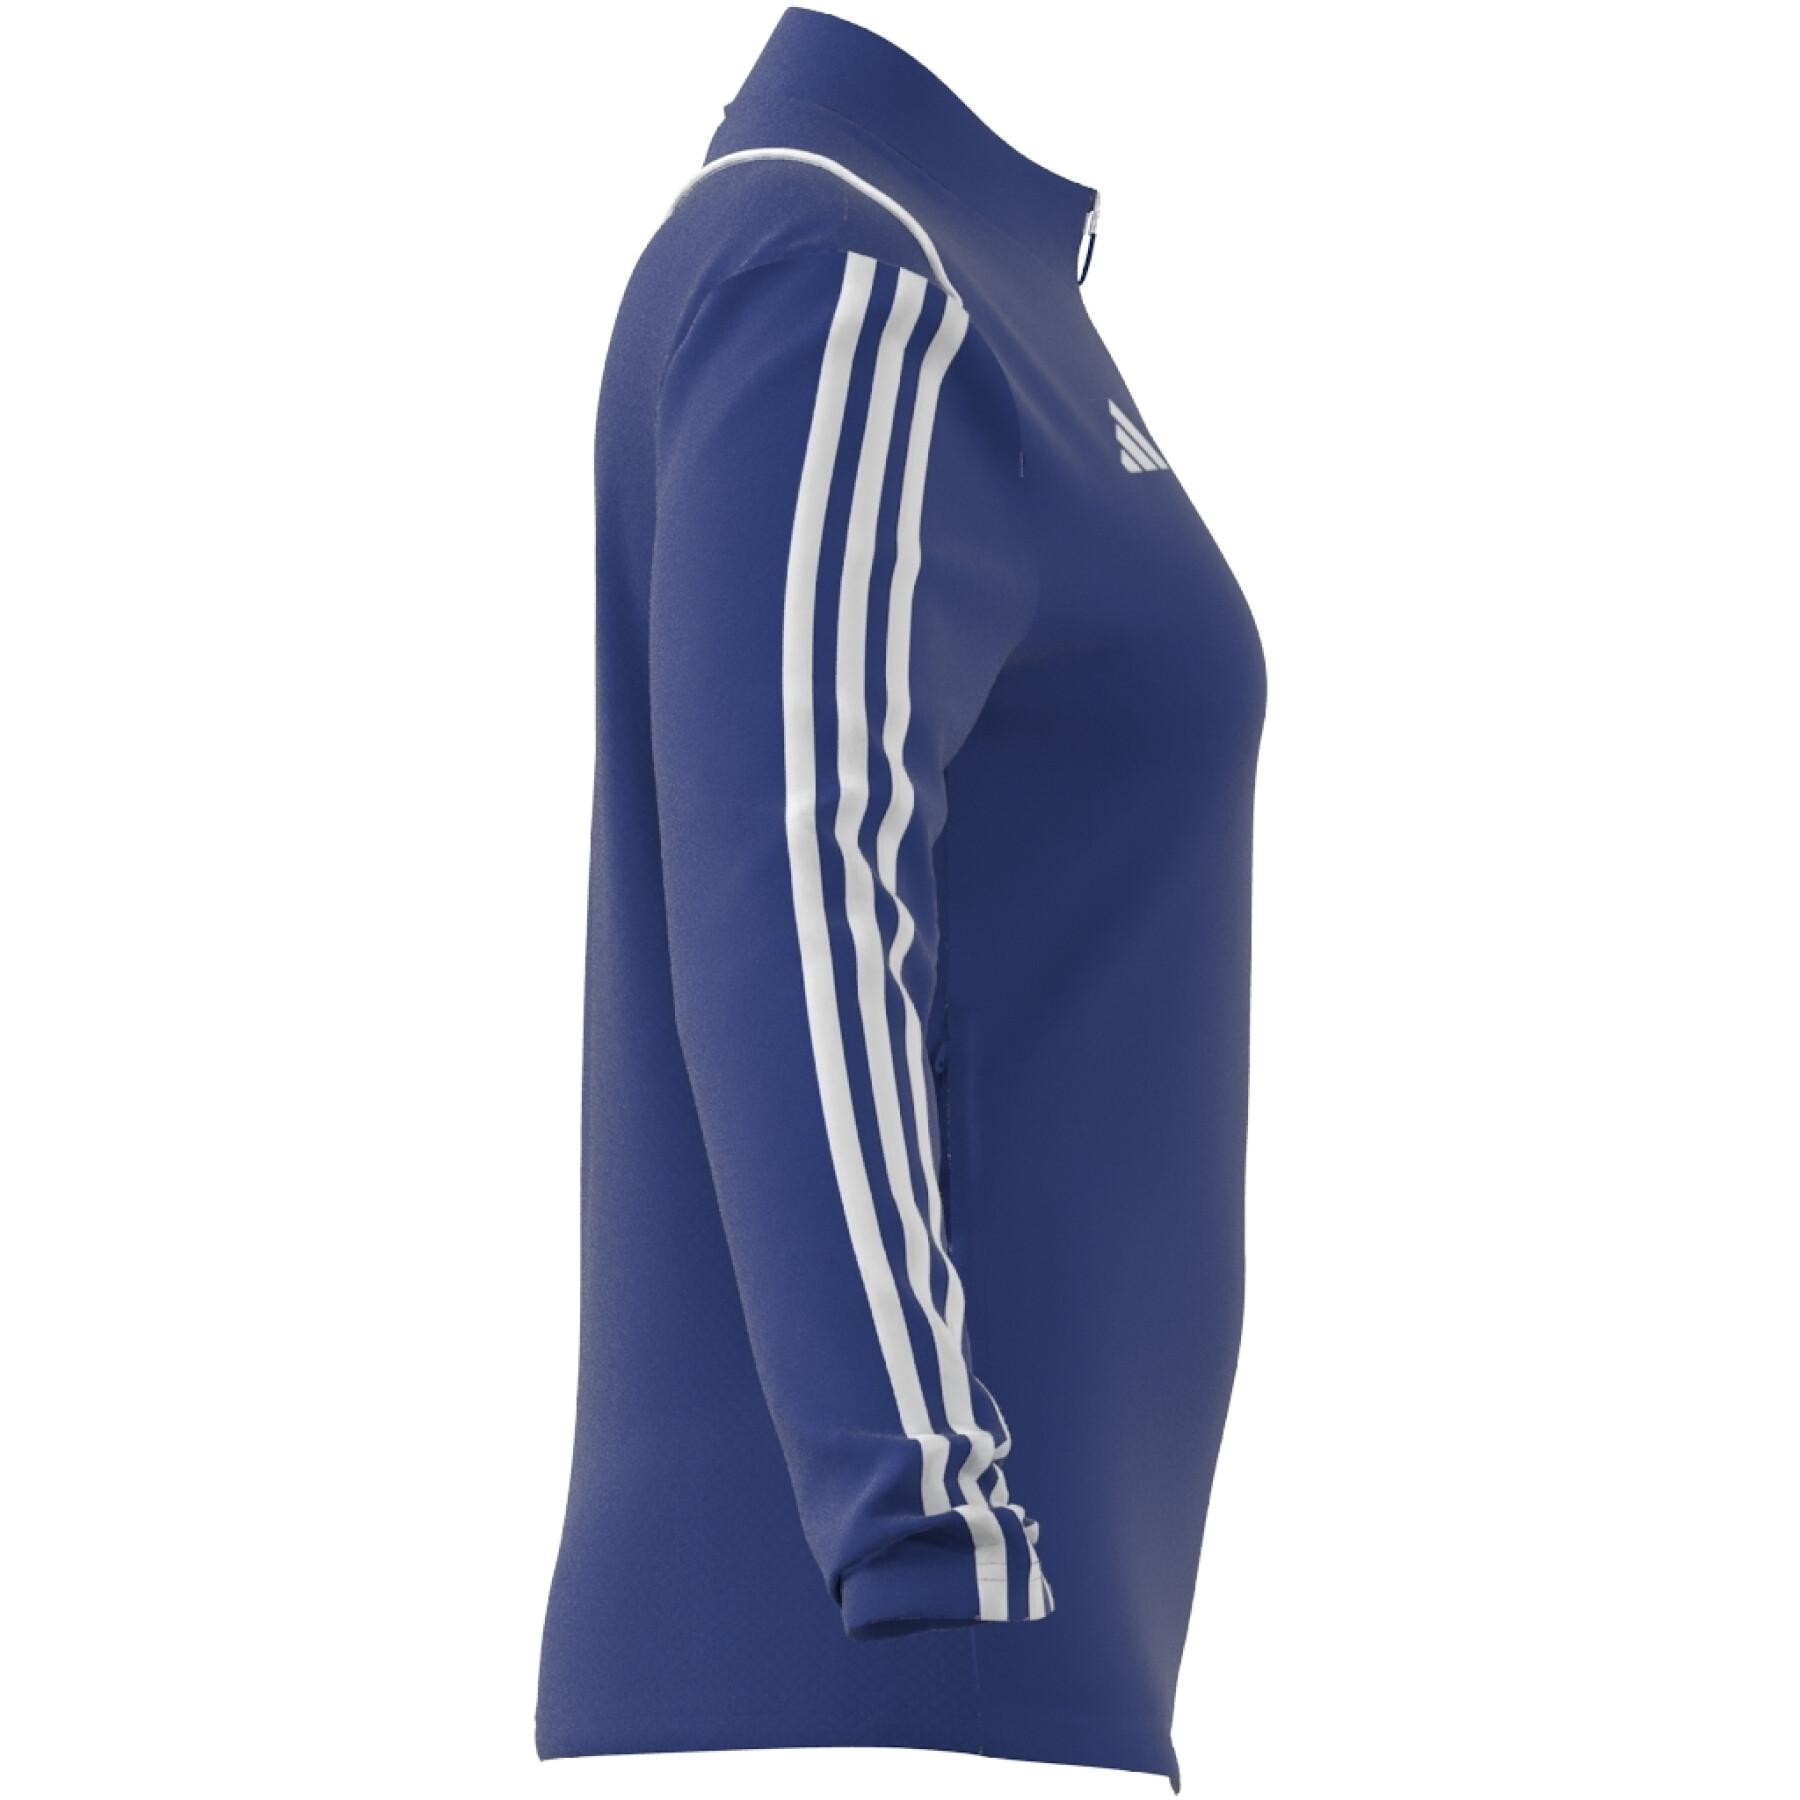 Women's sweat jacket adidas Tiro 23 League